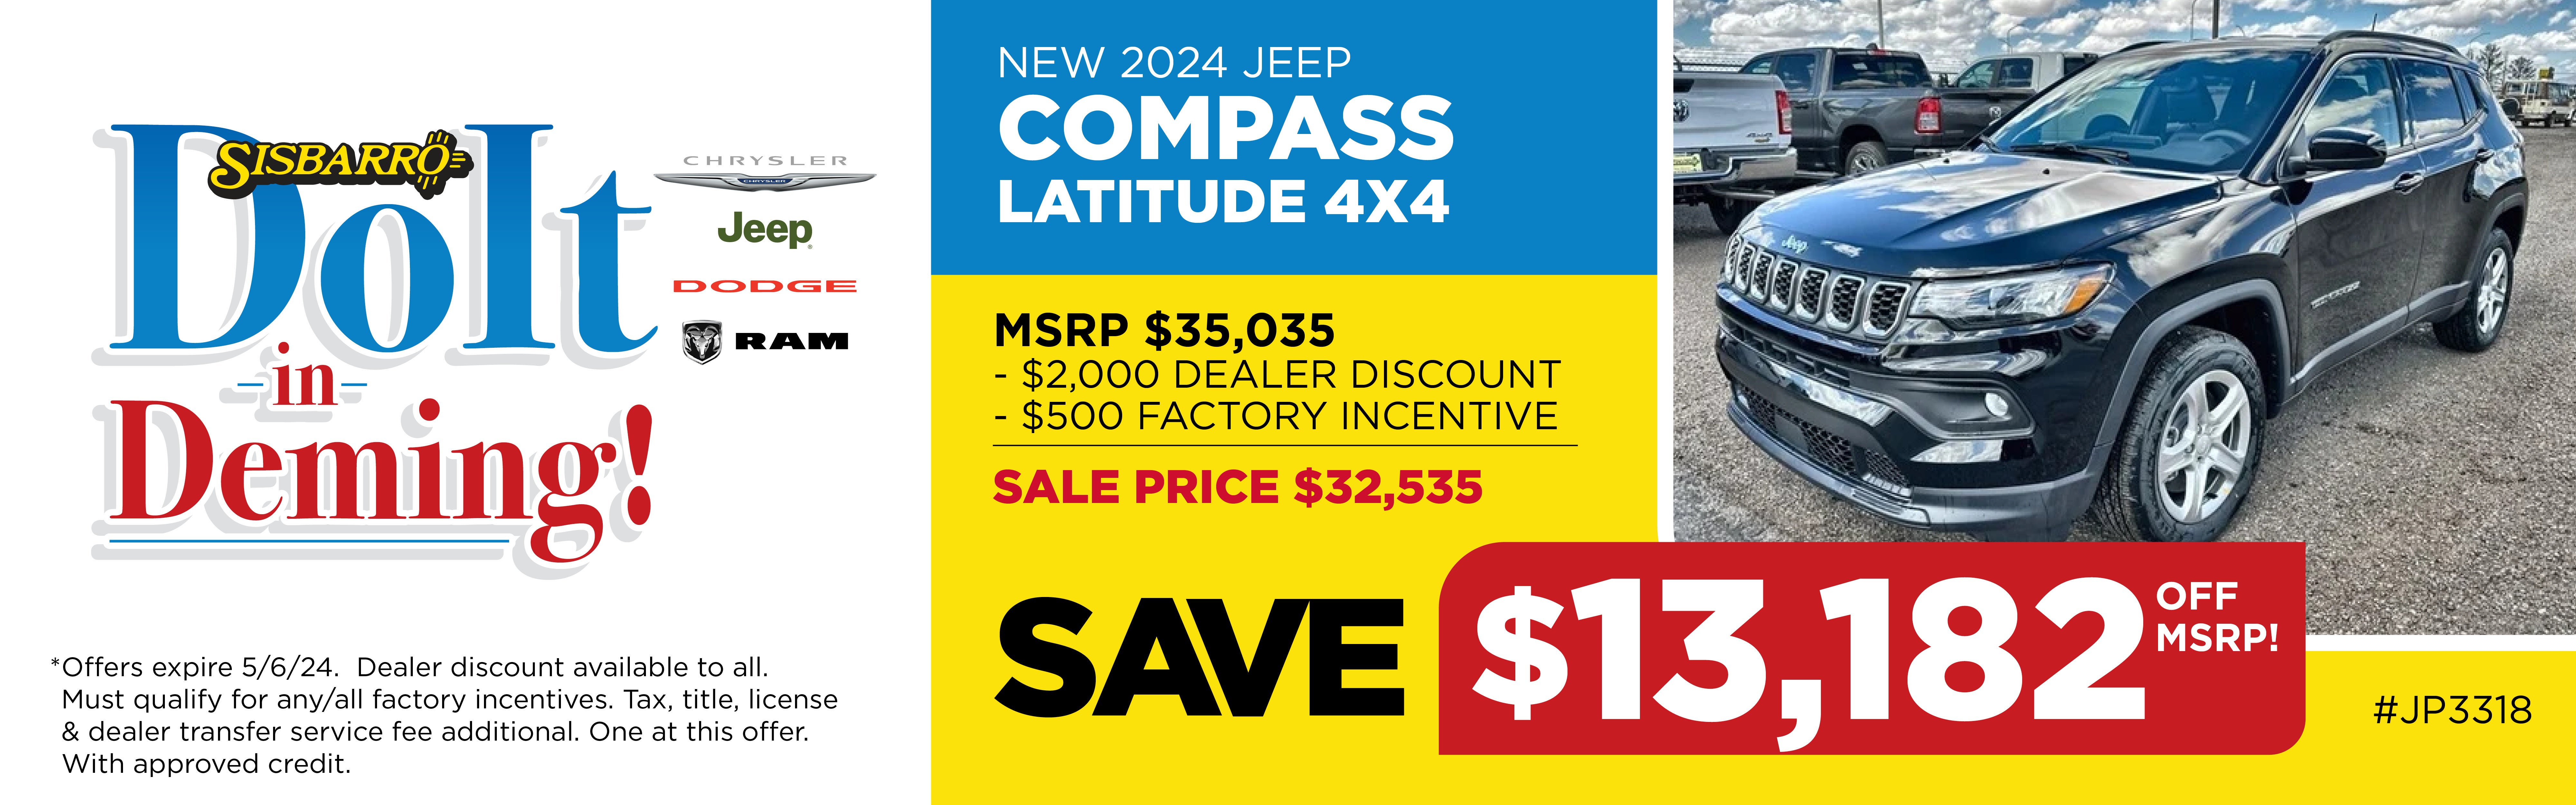 New 2024 Jeep Compass Latitude Lux 4x4